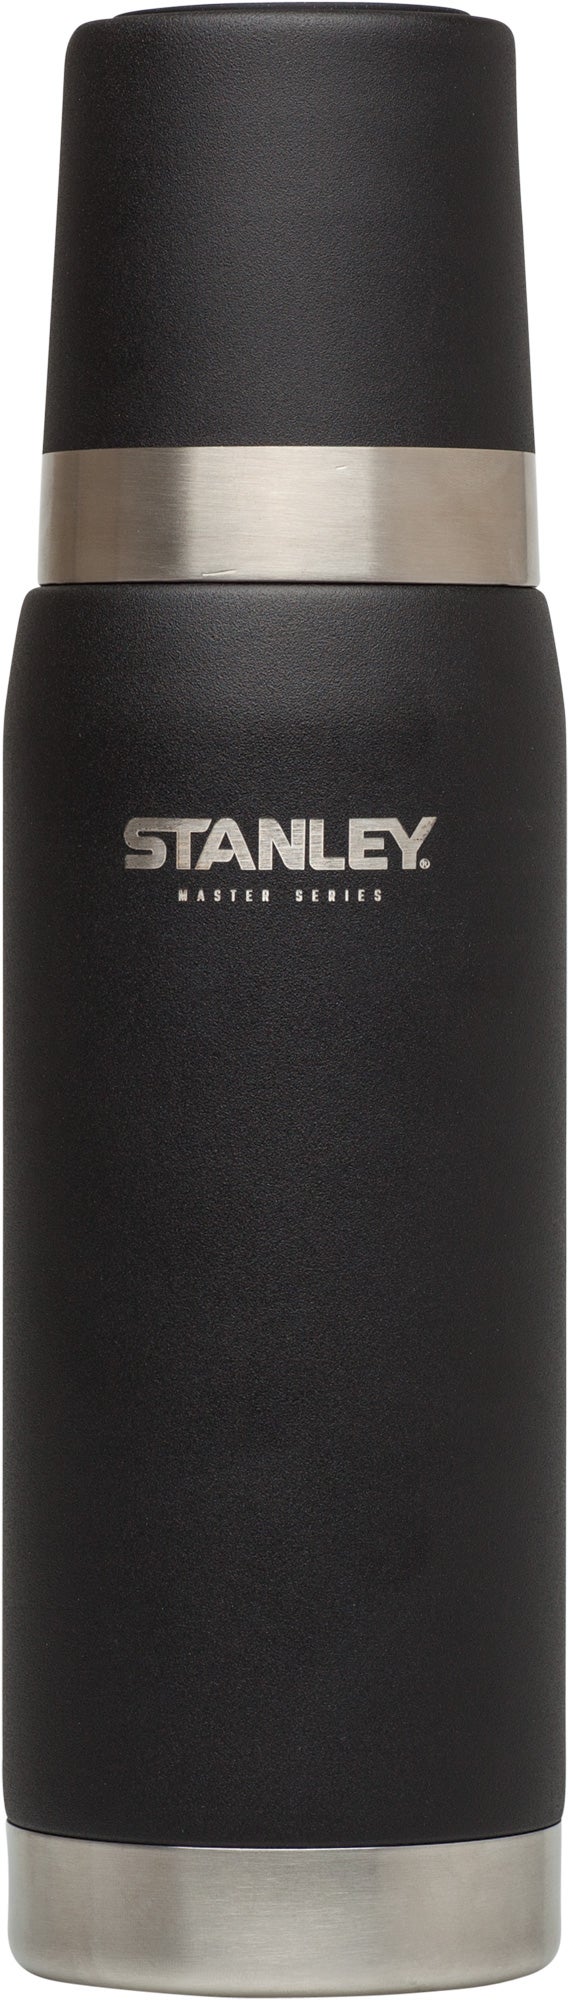 Stanley- Master's Series- Master Flask